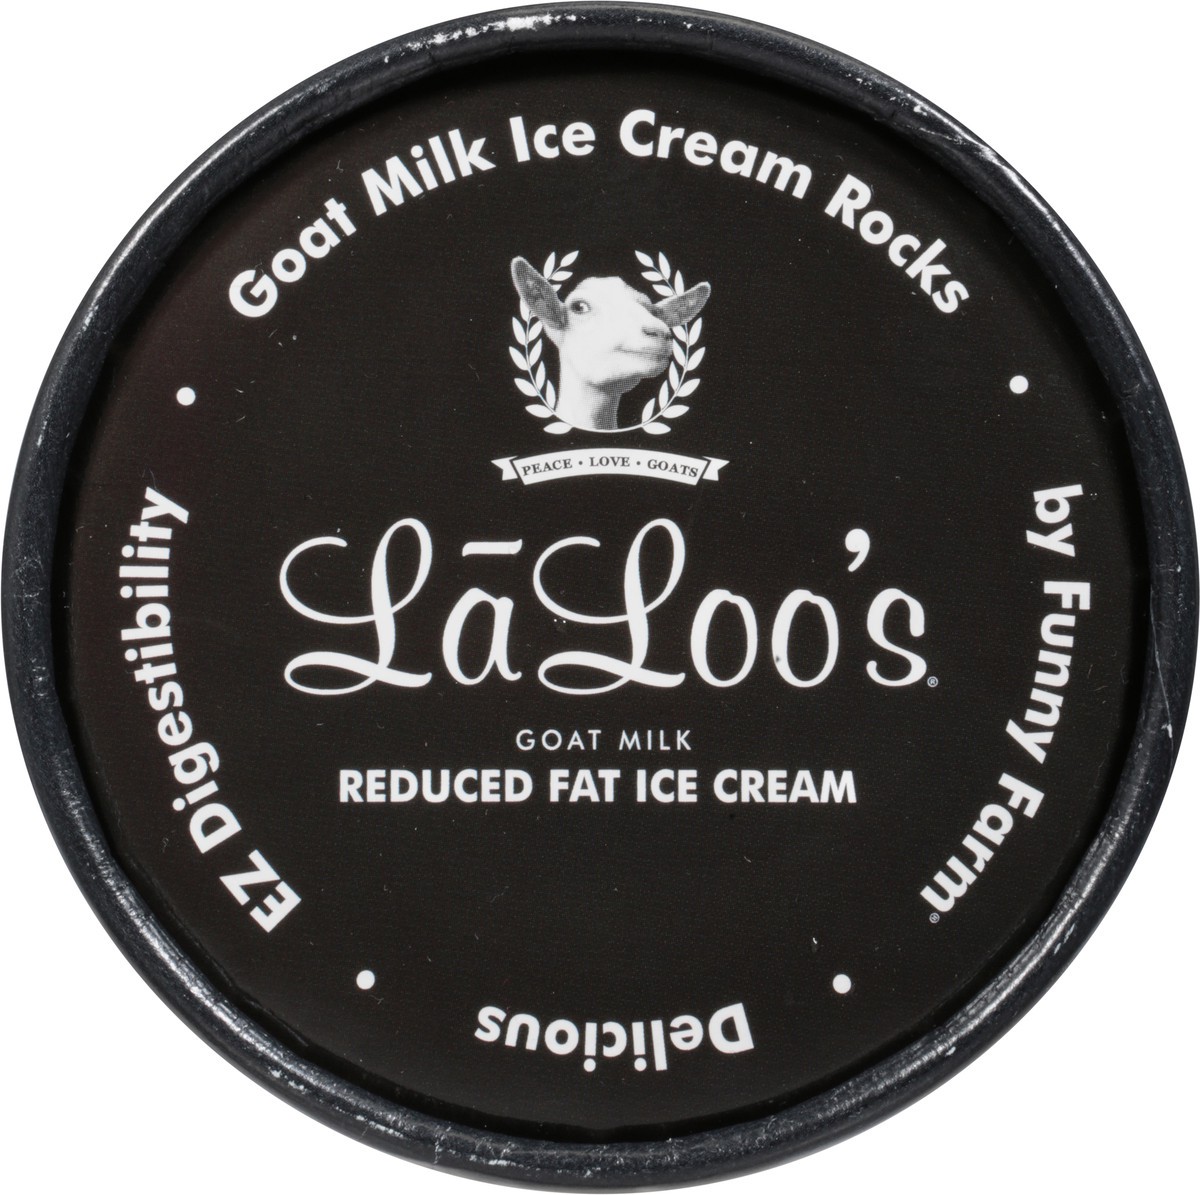 slide 9 of 9, LaLoo's Vanilla Snowflake Reduced Fat Goat Milk Ice Cream 1 pt, 1 pint